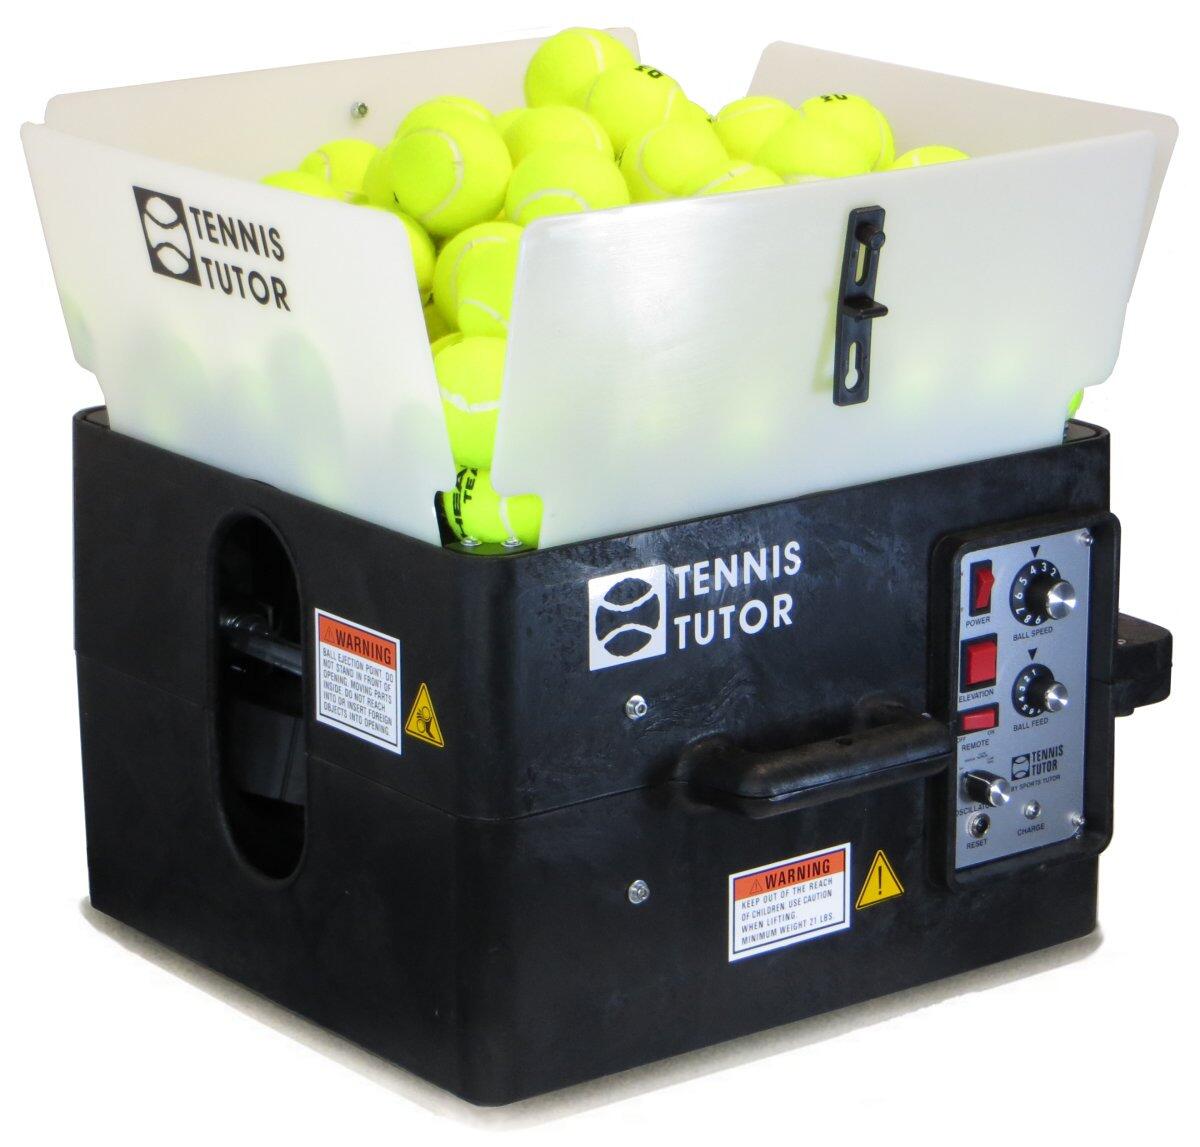 Tennis Tutor tennis ball machine